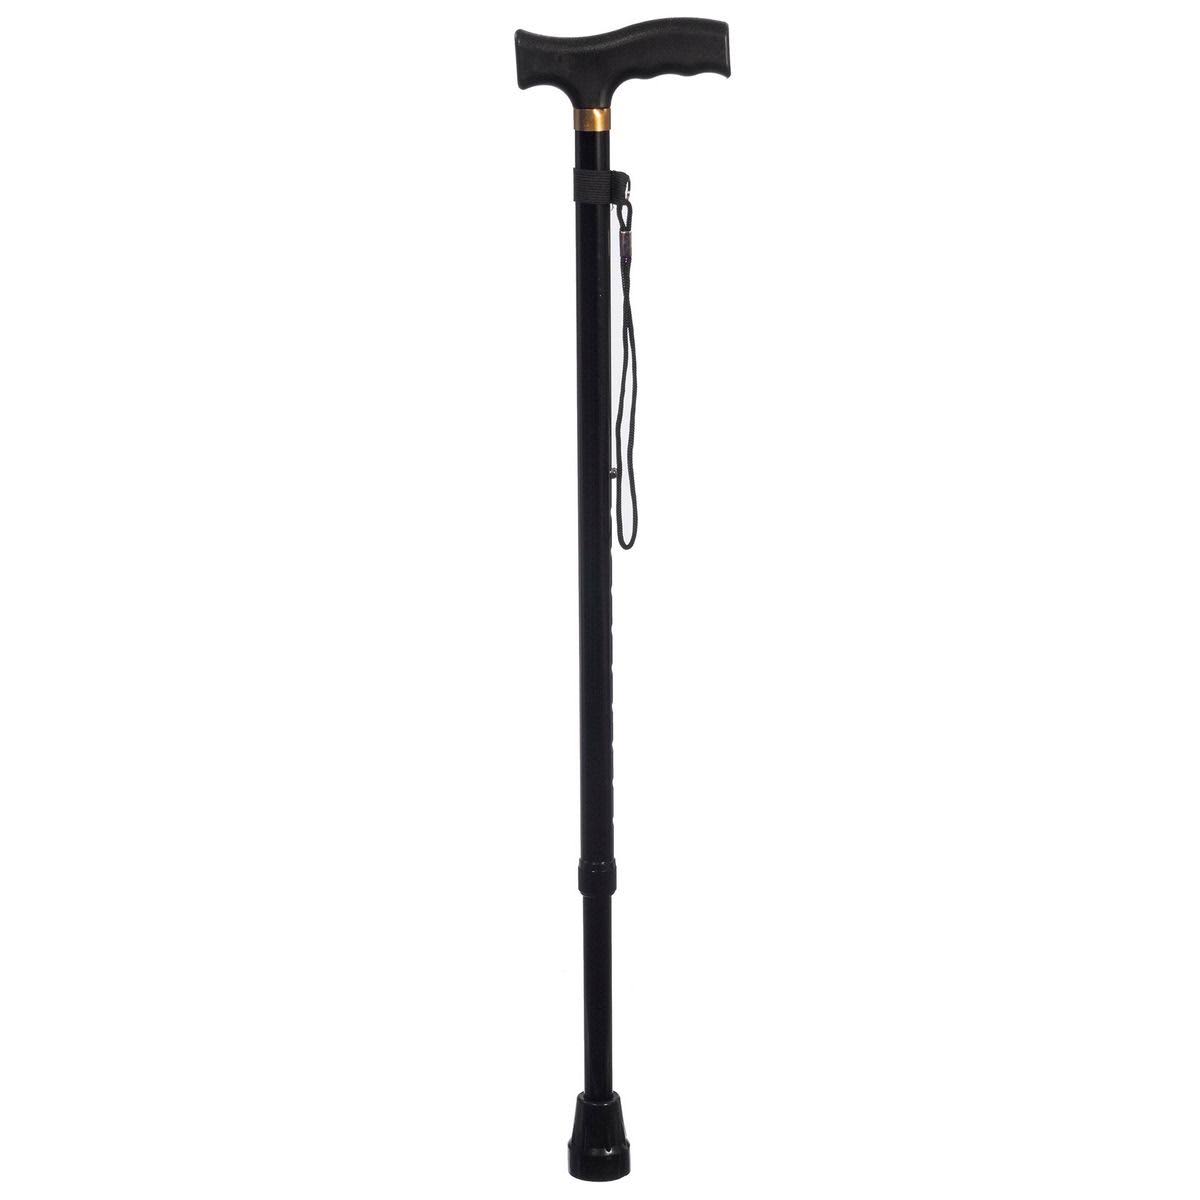 Sure Health & Beauty Height Adjustable Walking Stick